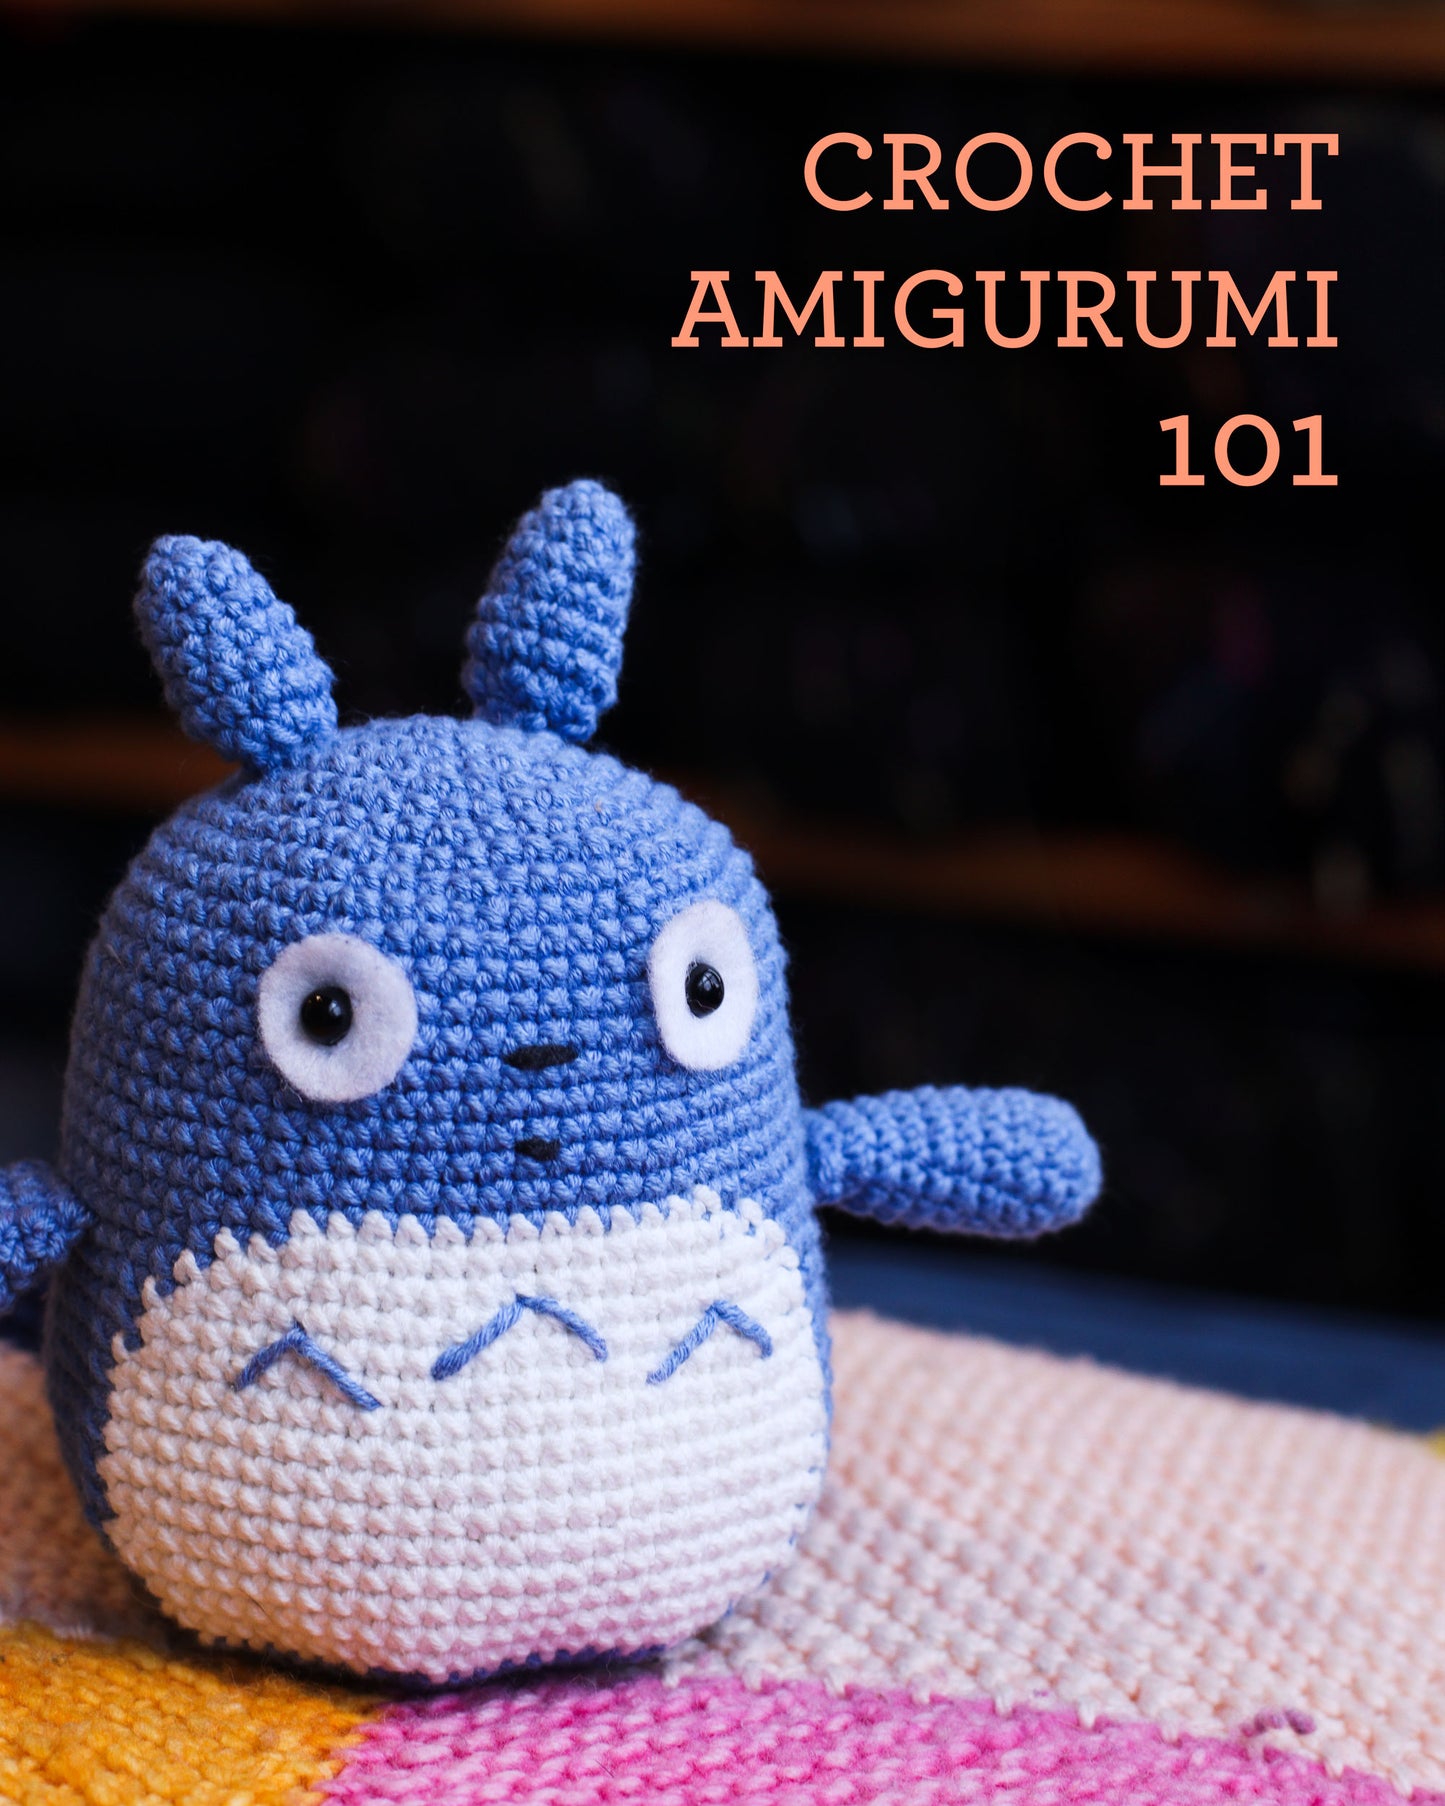 Crochet Amigurumi 101